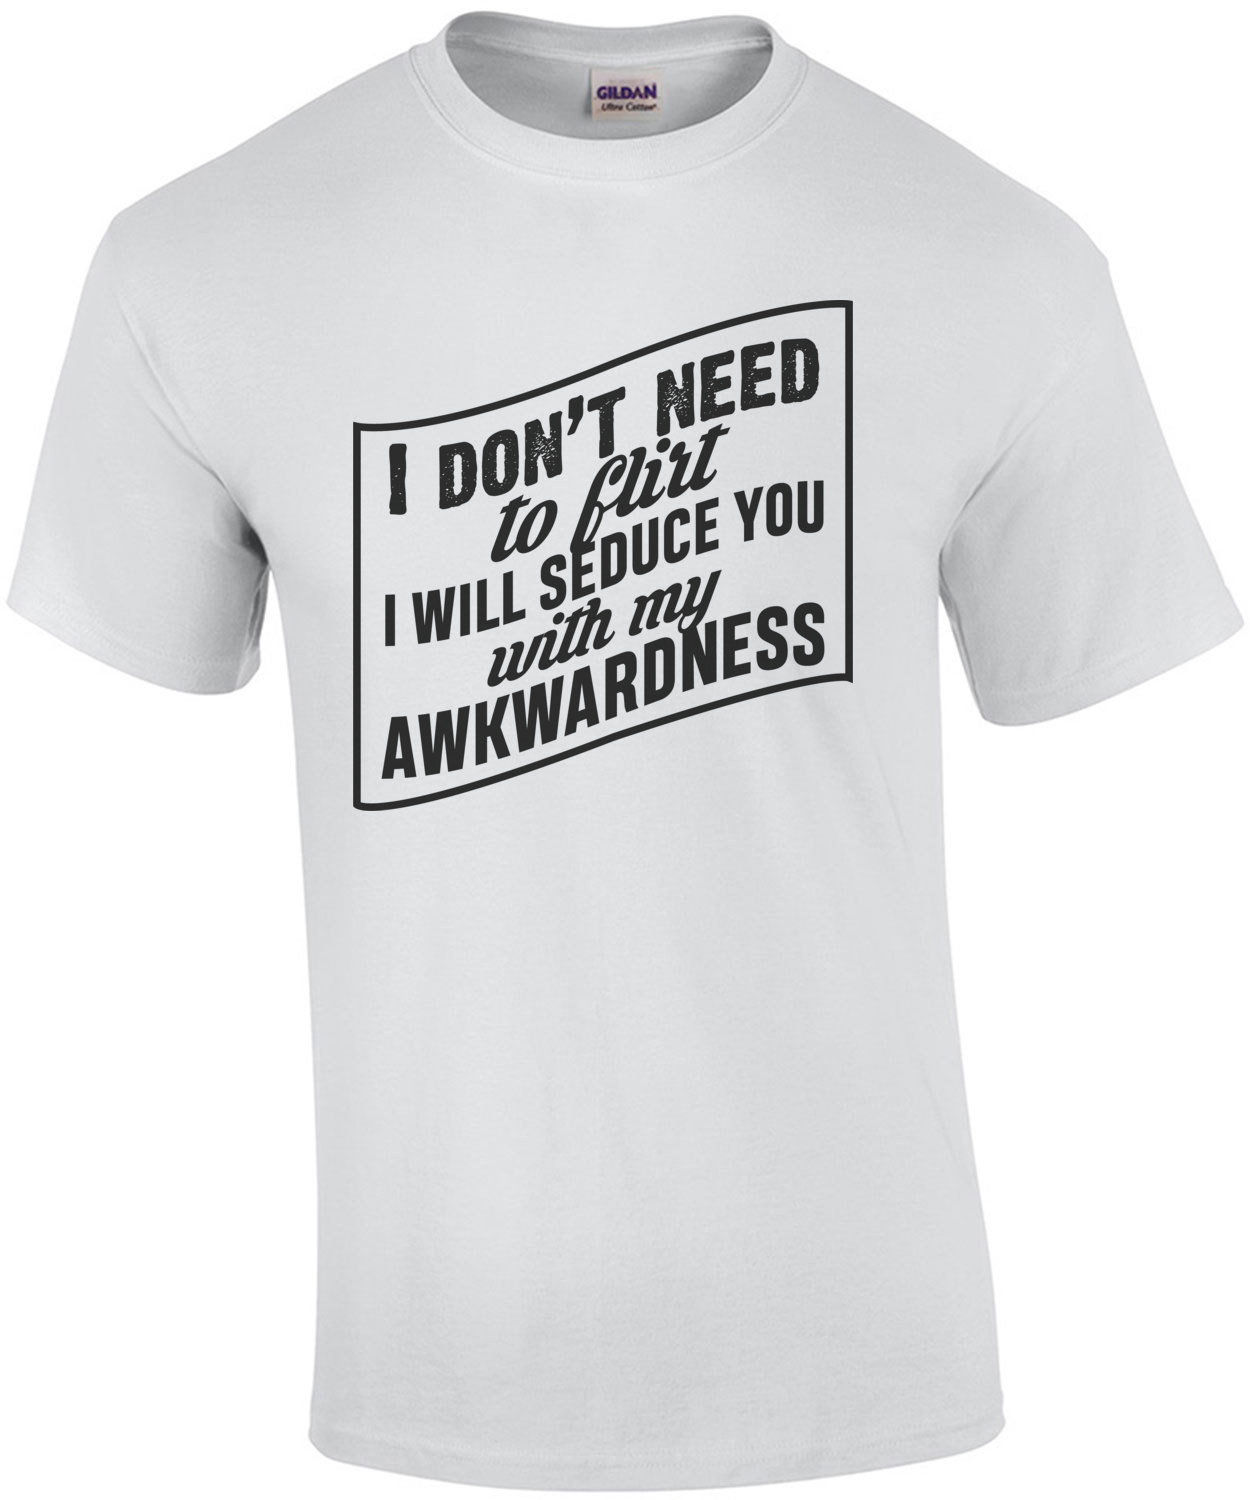 I don't need to flirt I will seduce you with my awkwardness - funny nerd t-shirt